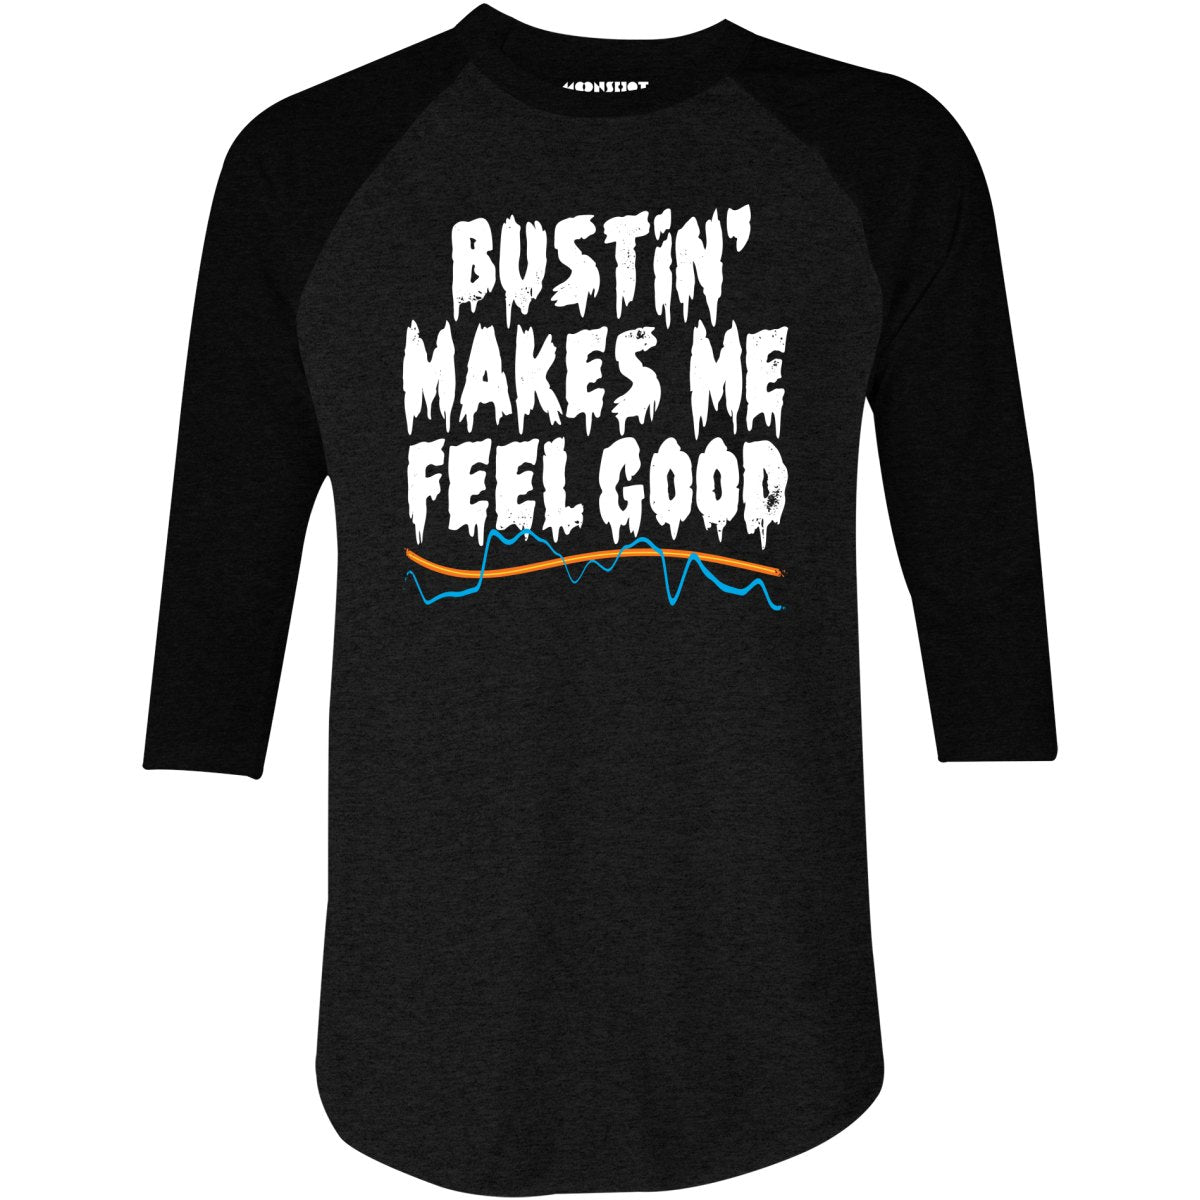 Bustin' Makes Me Feel Good - 3/4 Sleeve Raglan T-Shirt